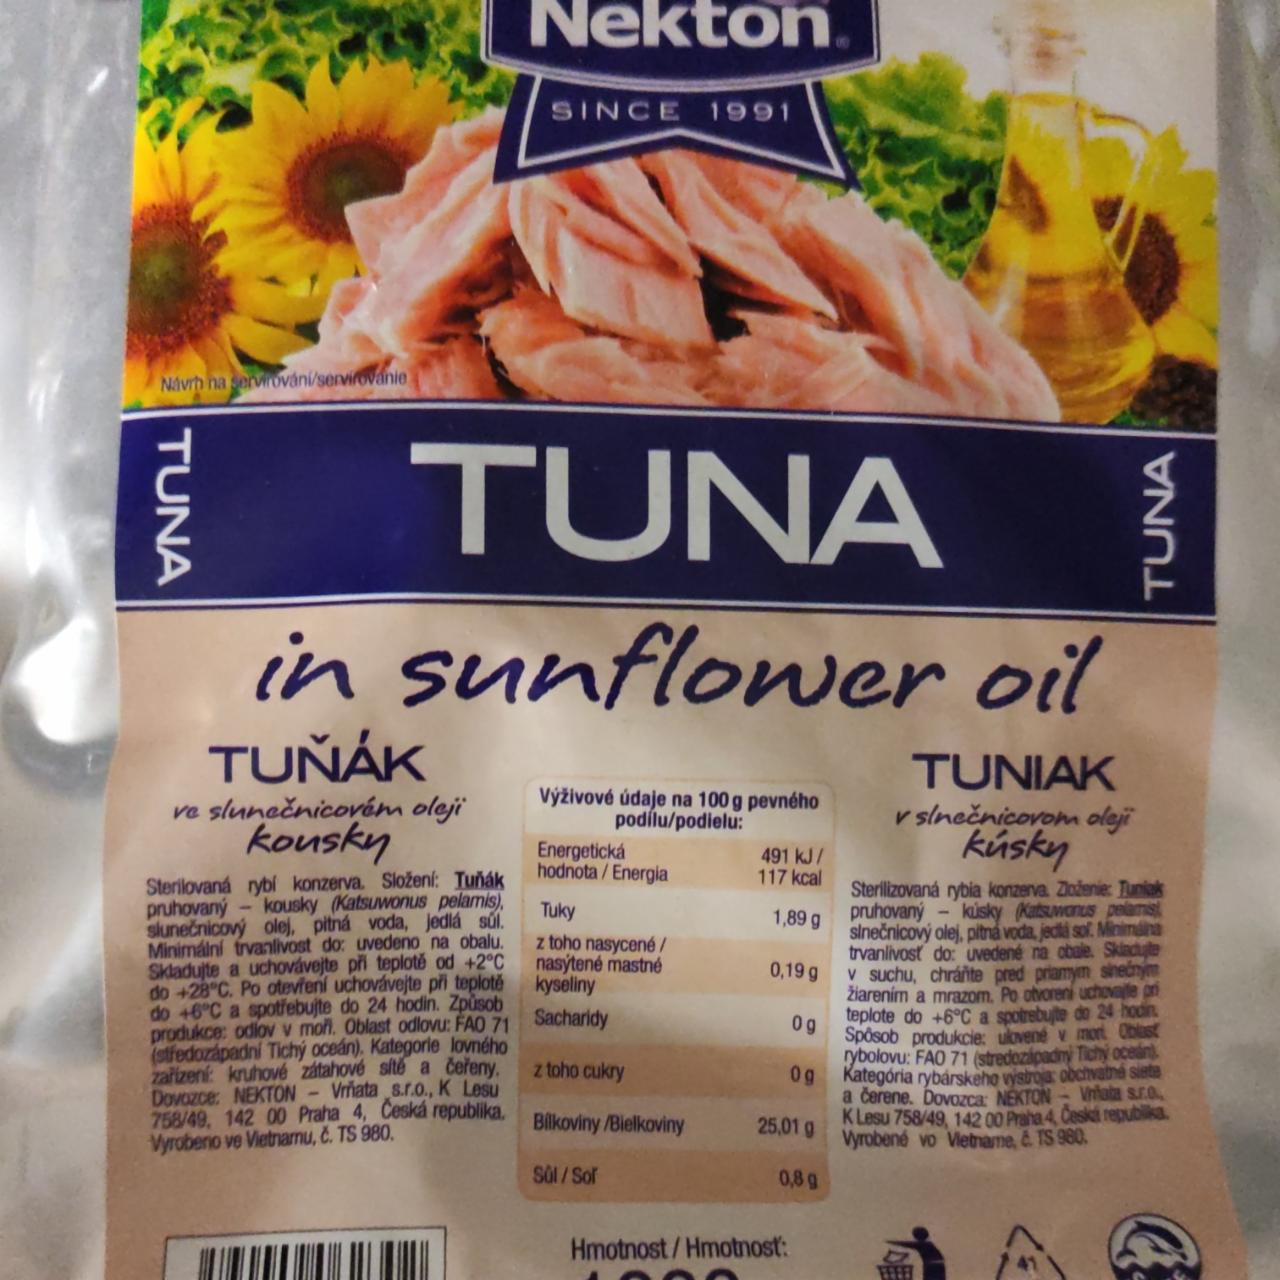 Fotografie - Tuna in sunflower oil Nekton